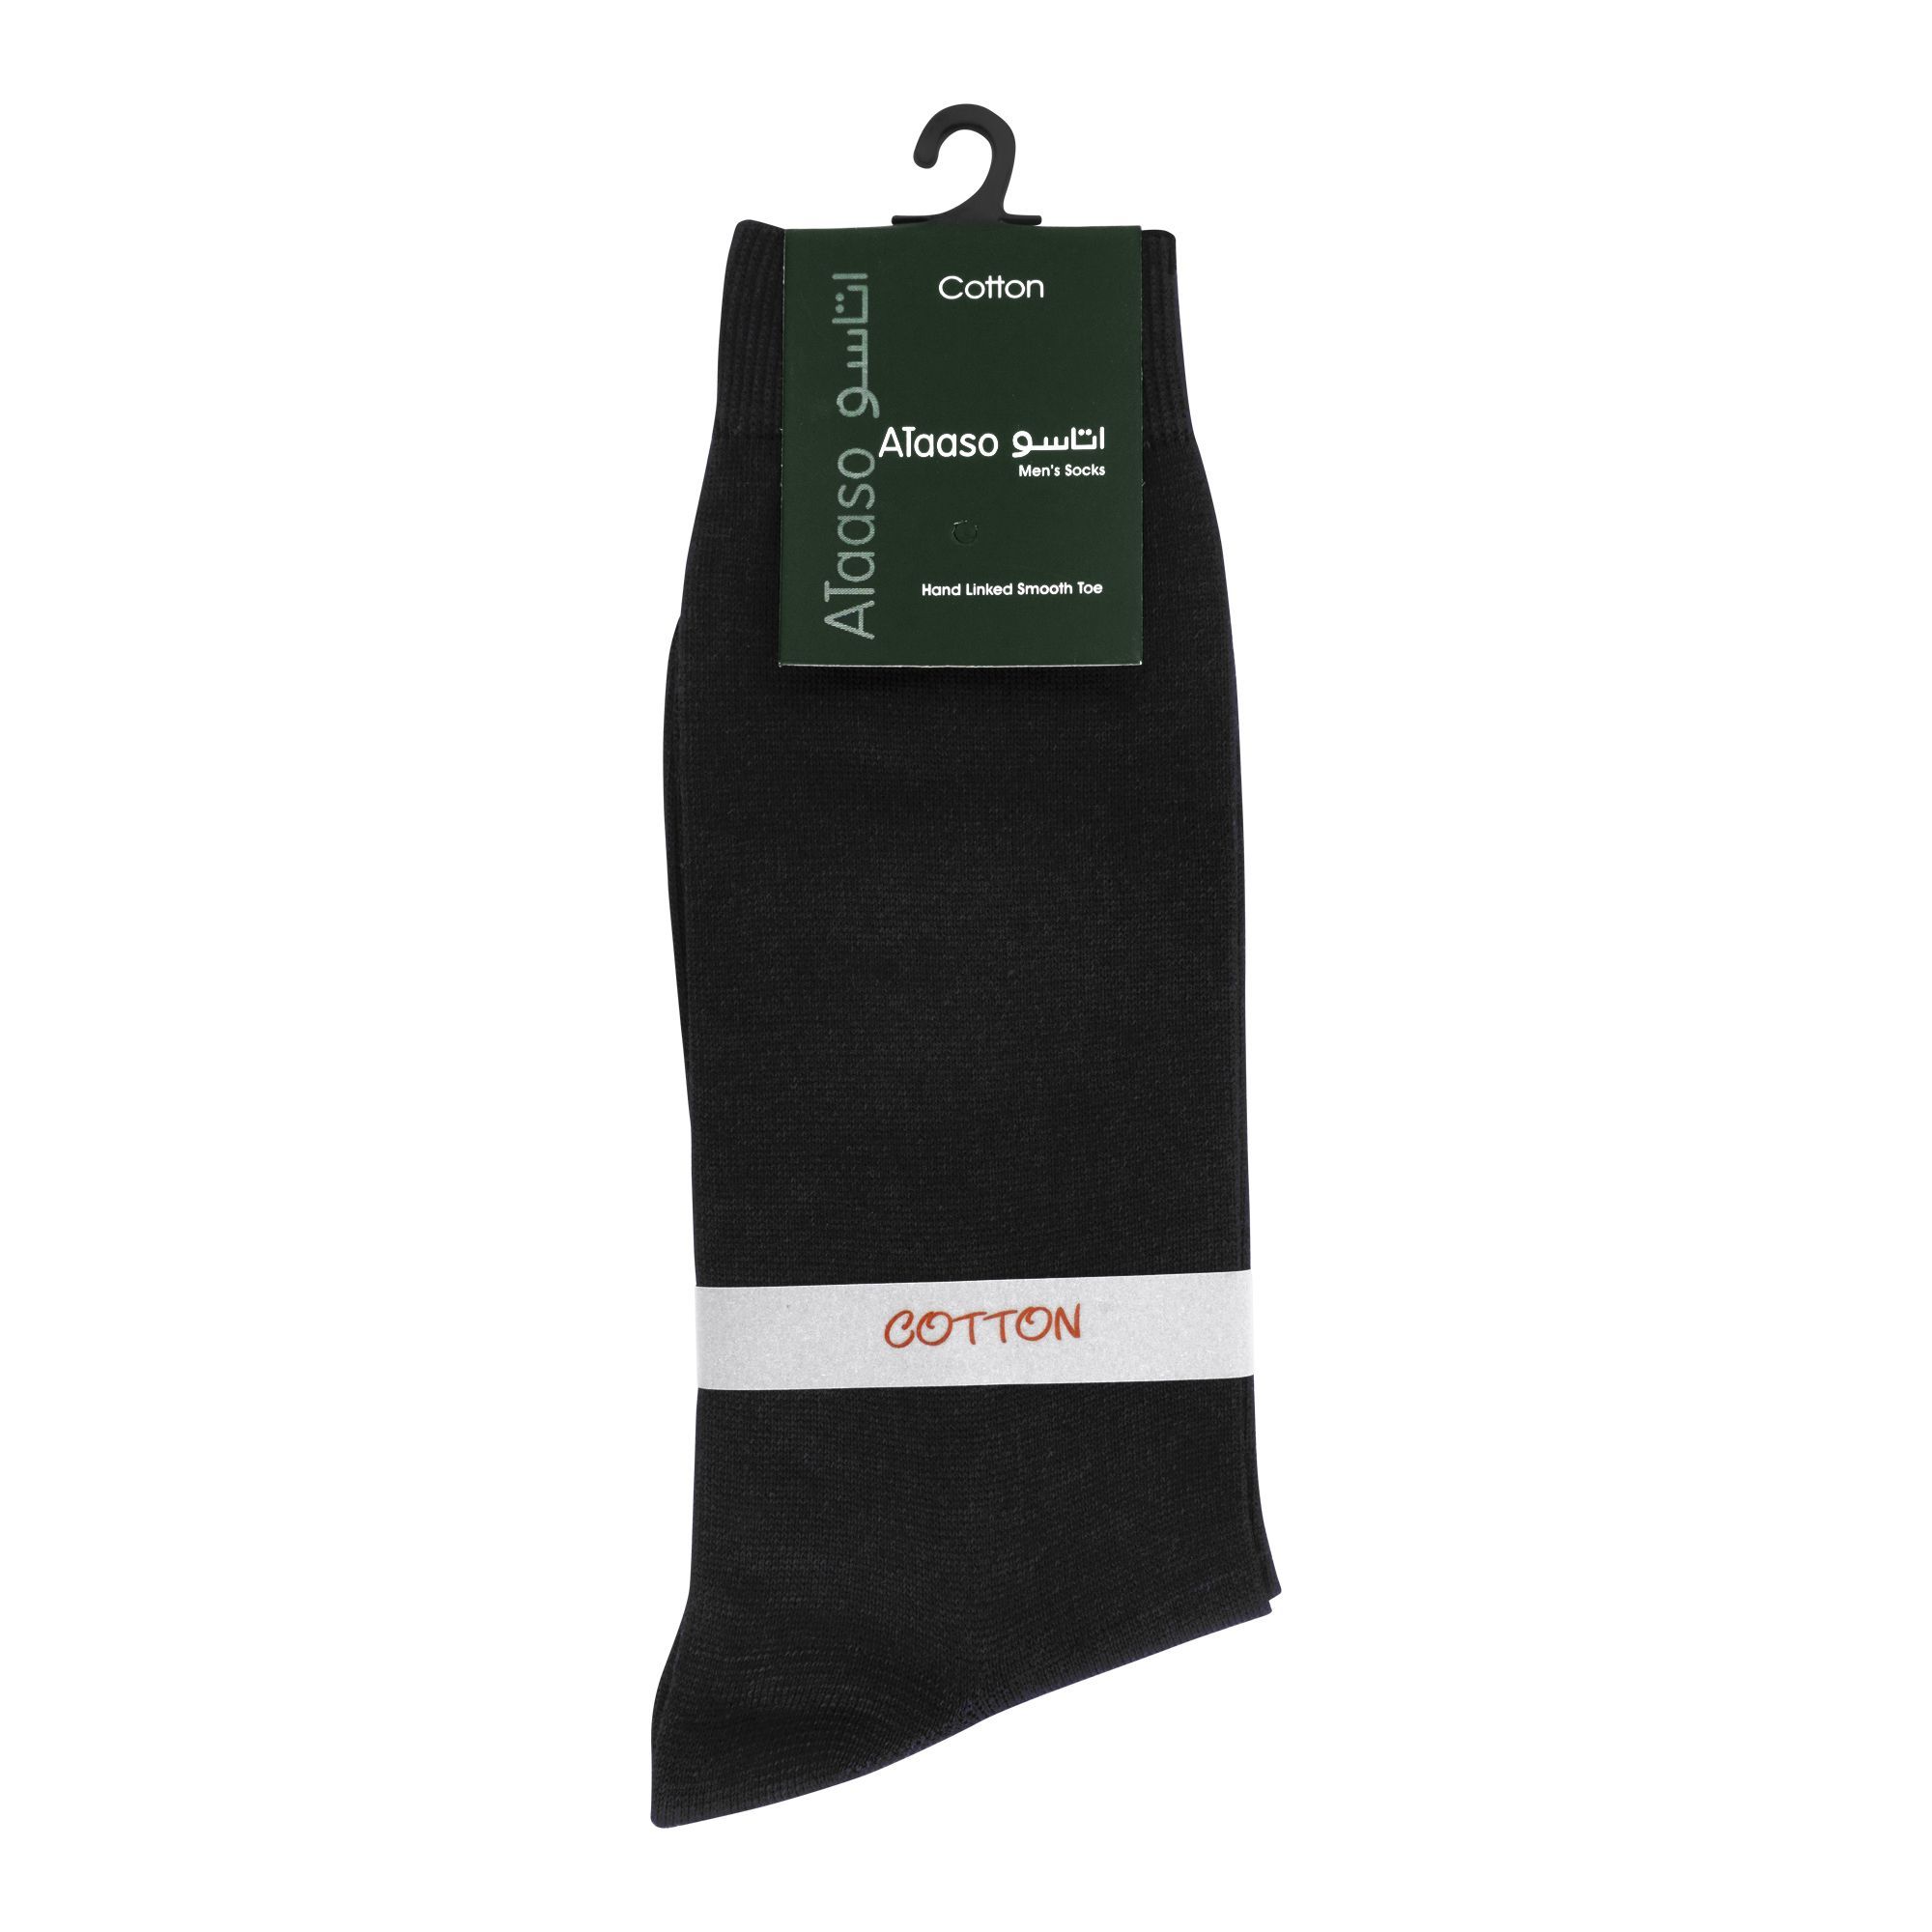 Buy Ataaso Cotton Plain Men's Socks, Black Online at Best Price in ...